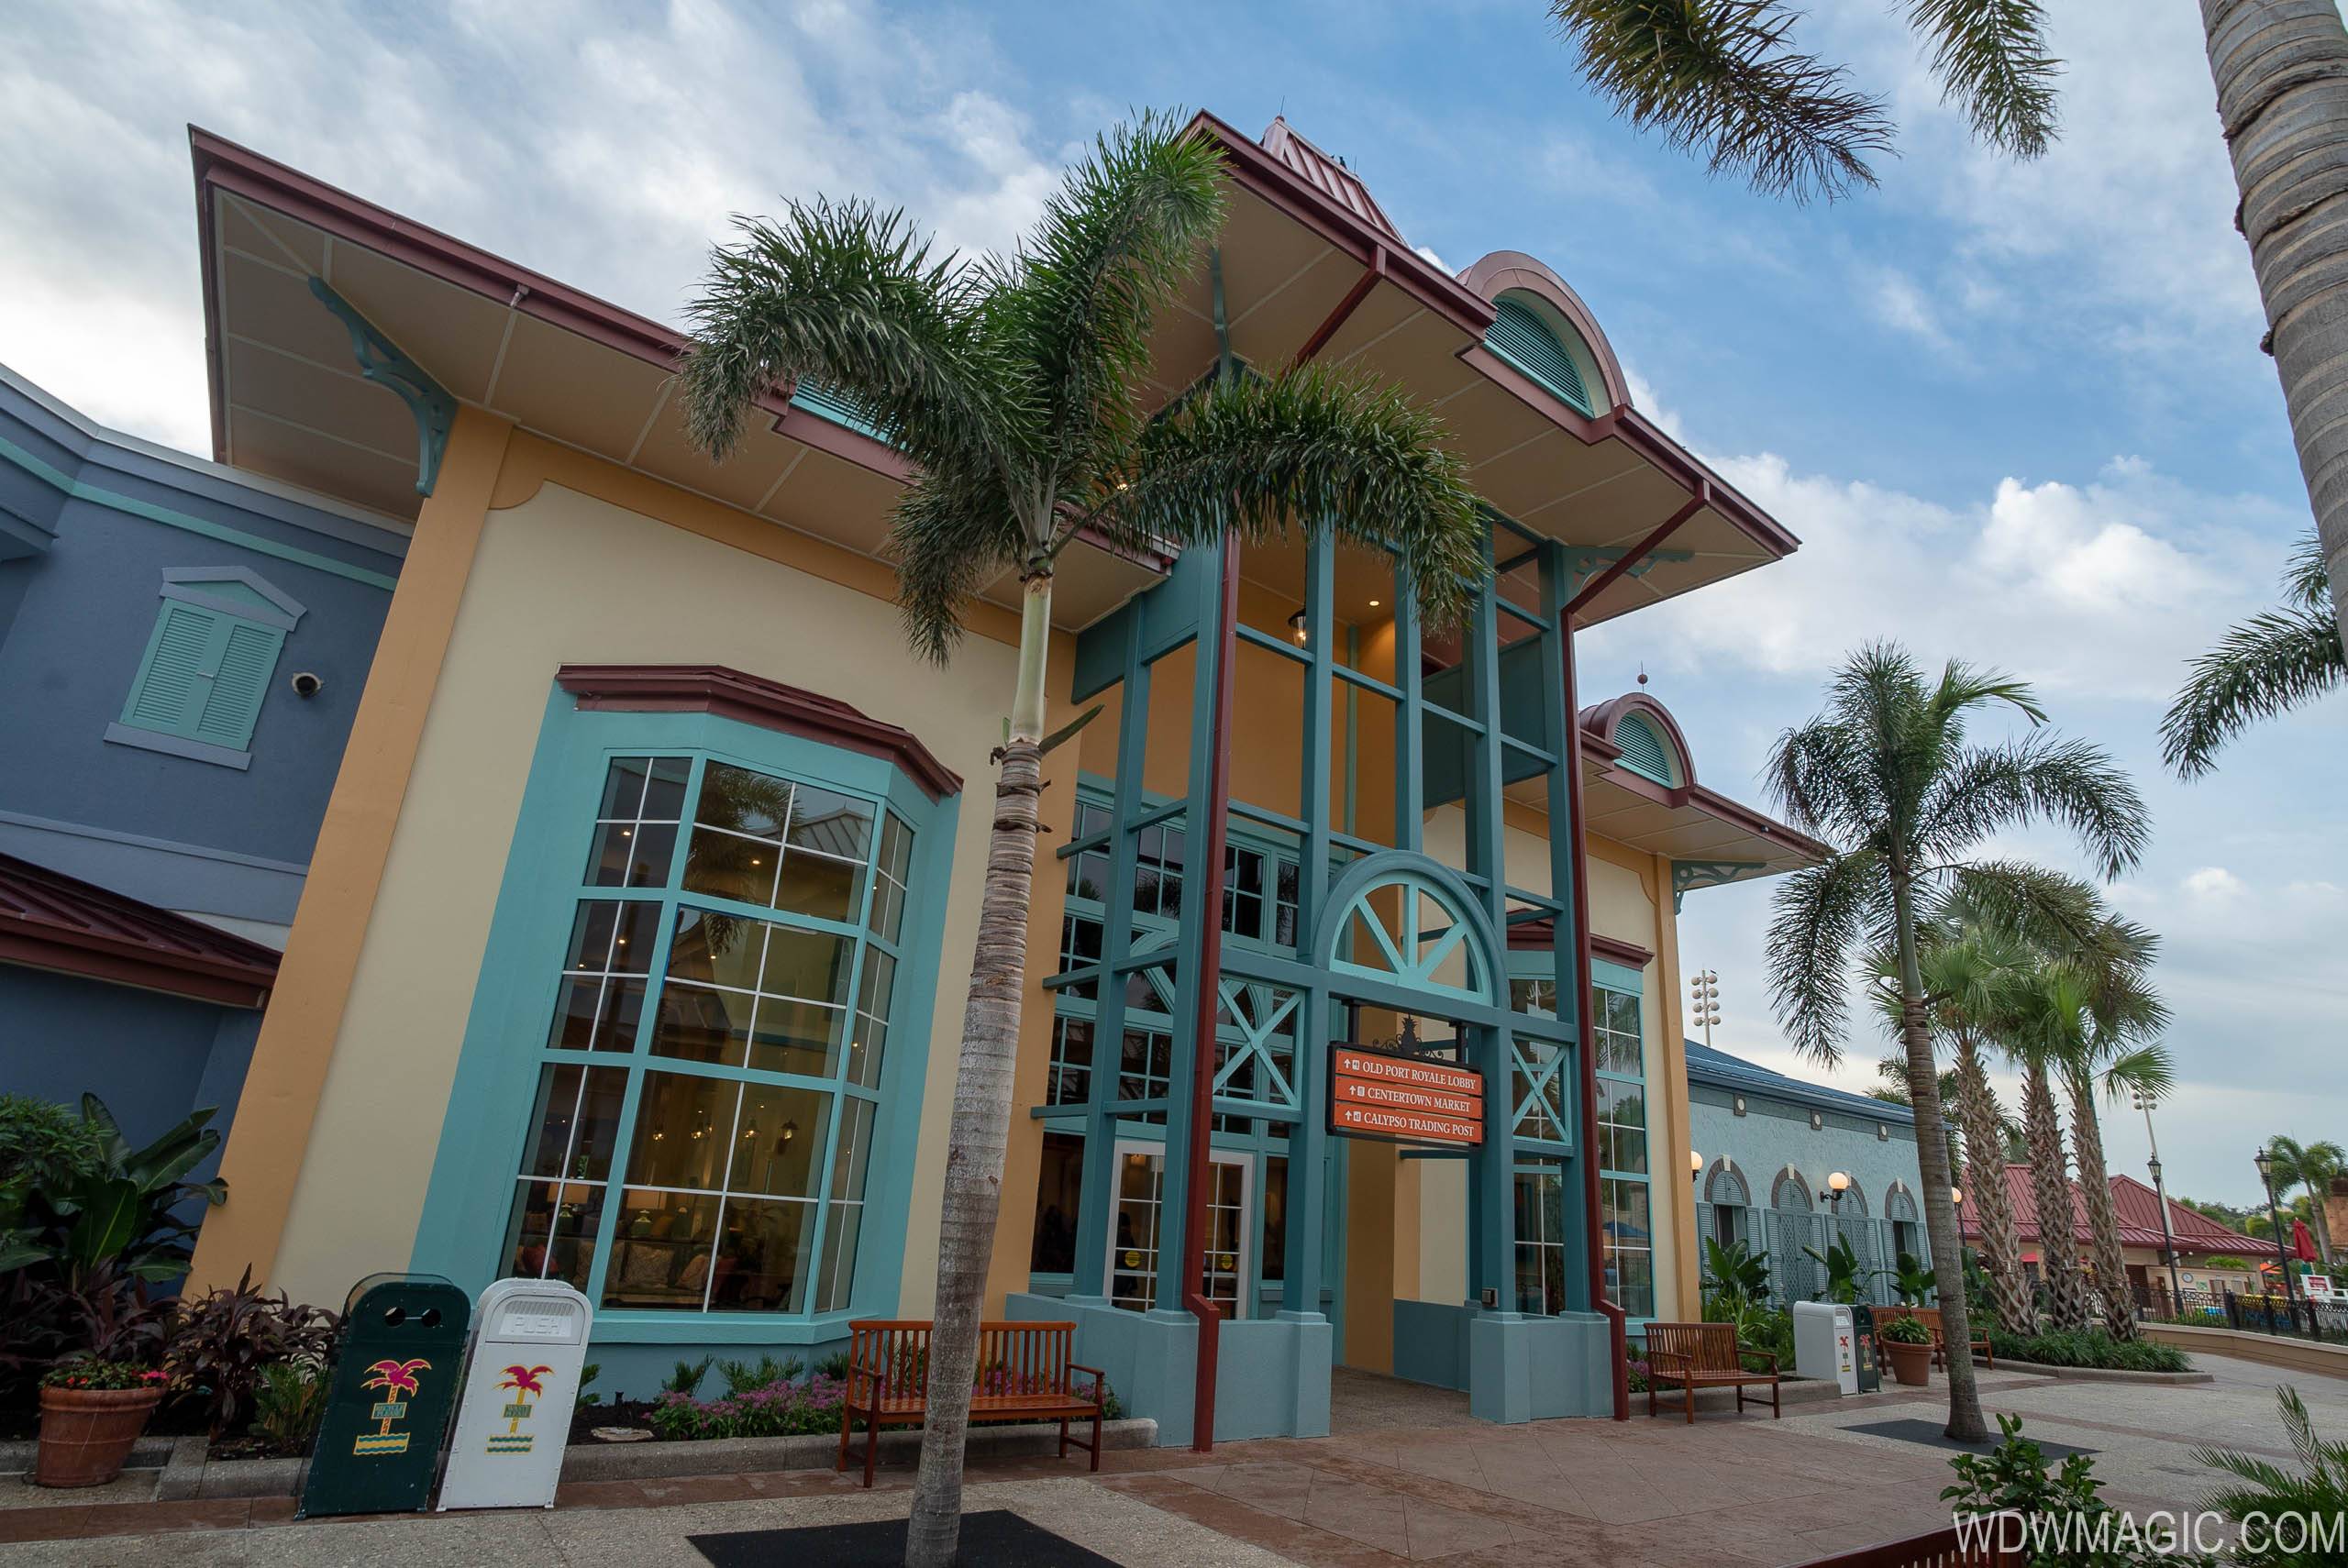 VIDEO - Disney's Caribbean Beach Resort 30th Anniversary moment